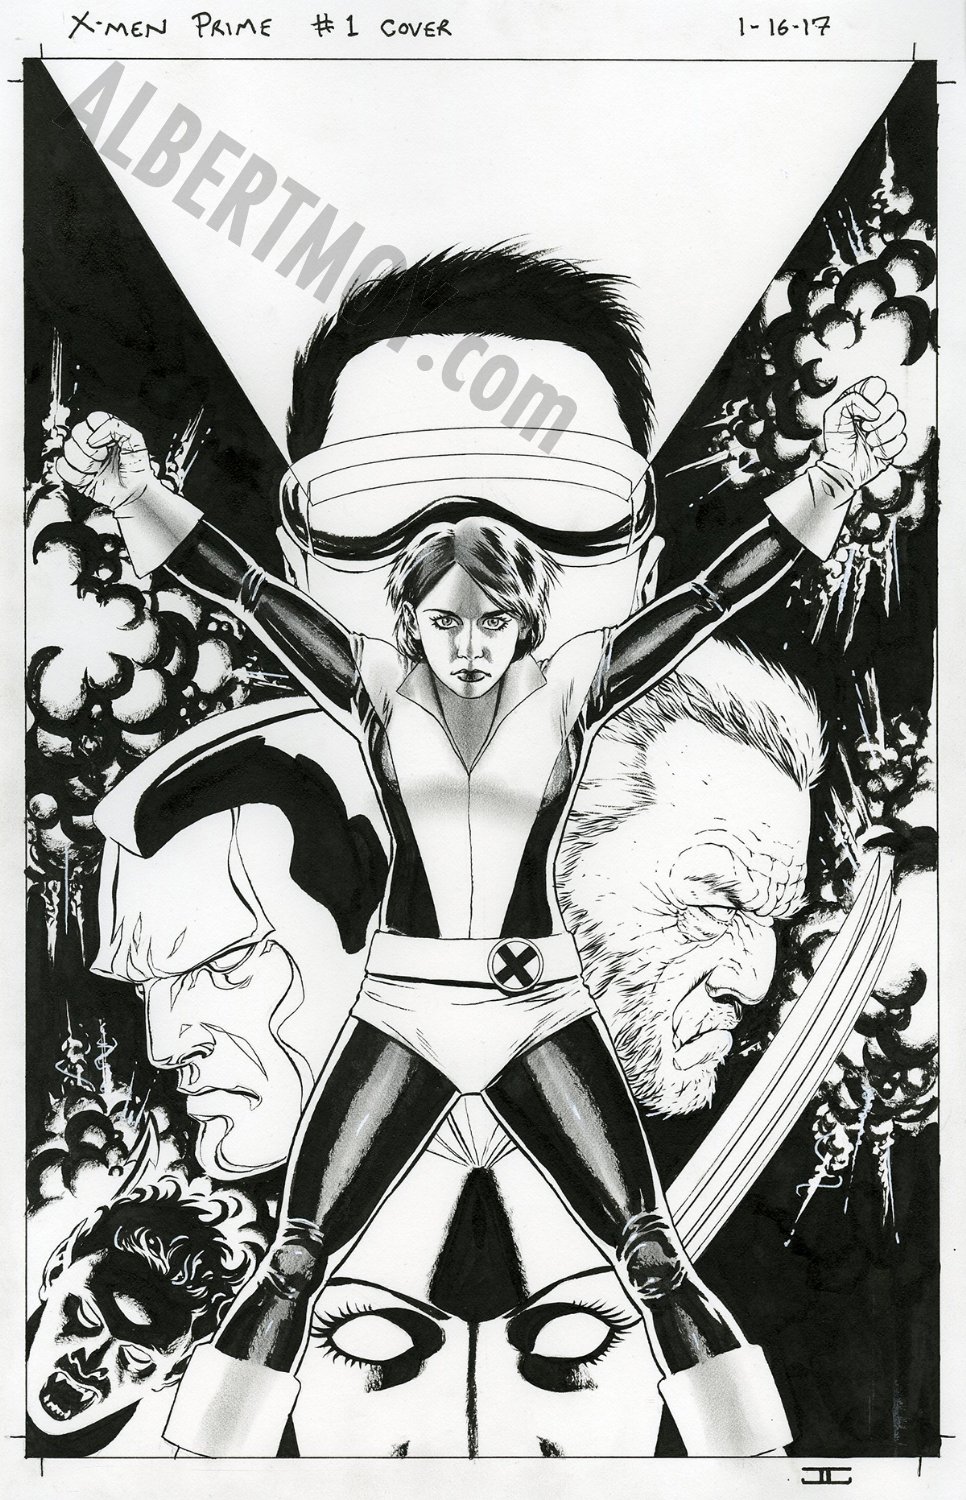 Albert Moy : Original Comic Art - X-Men Prime by John Cassaday